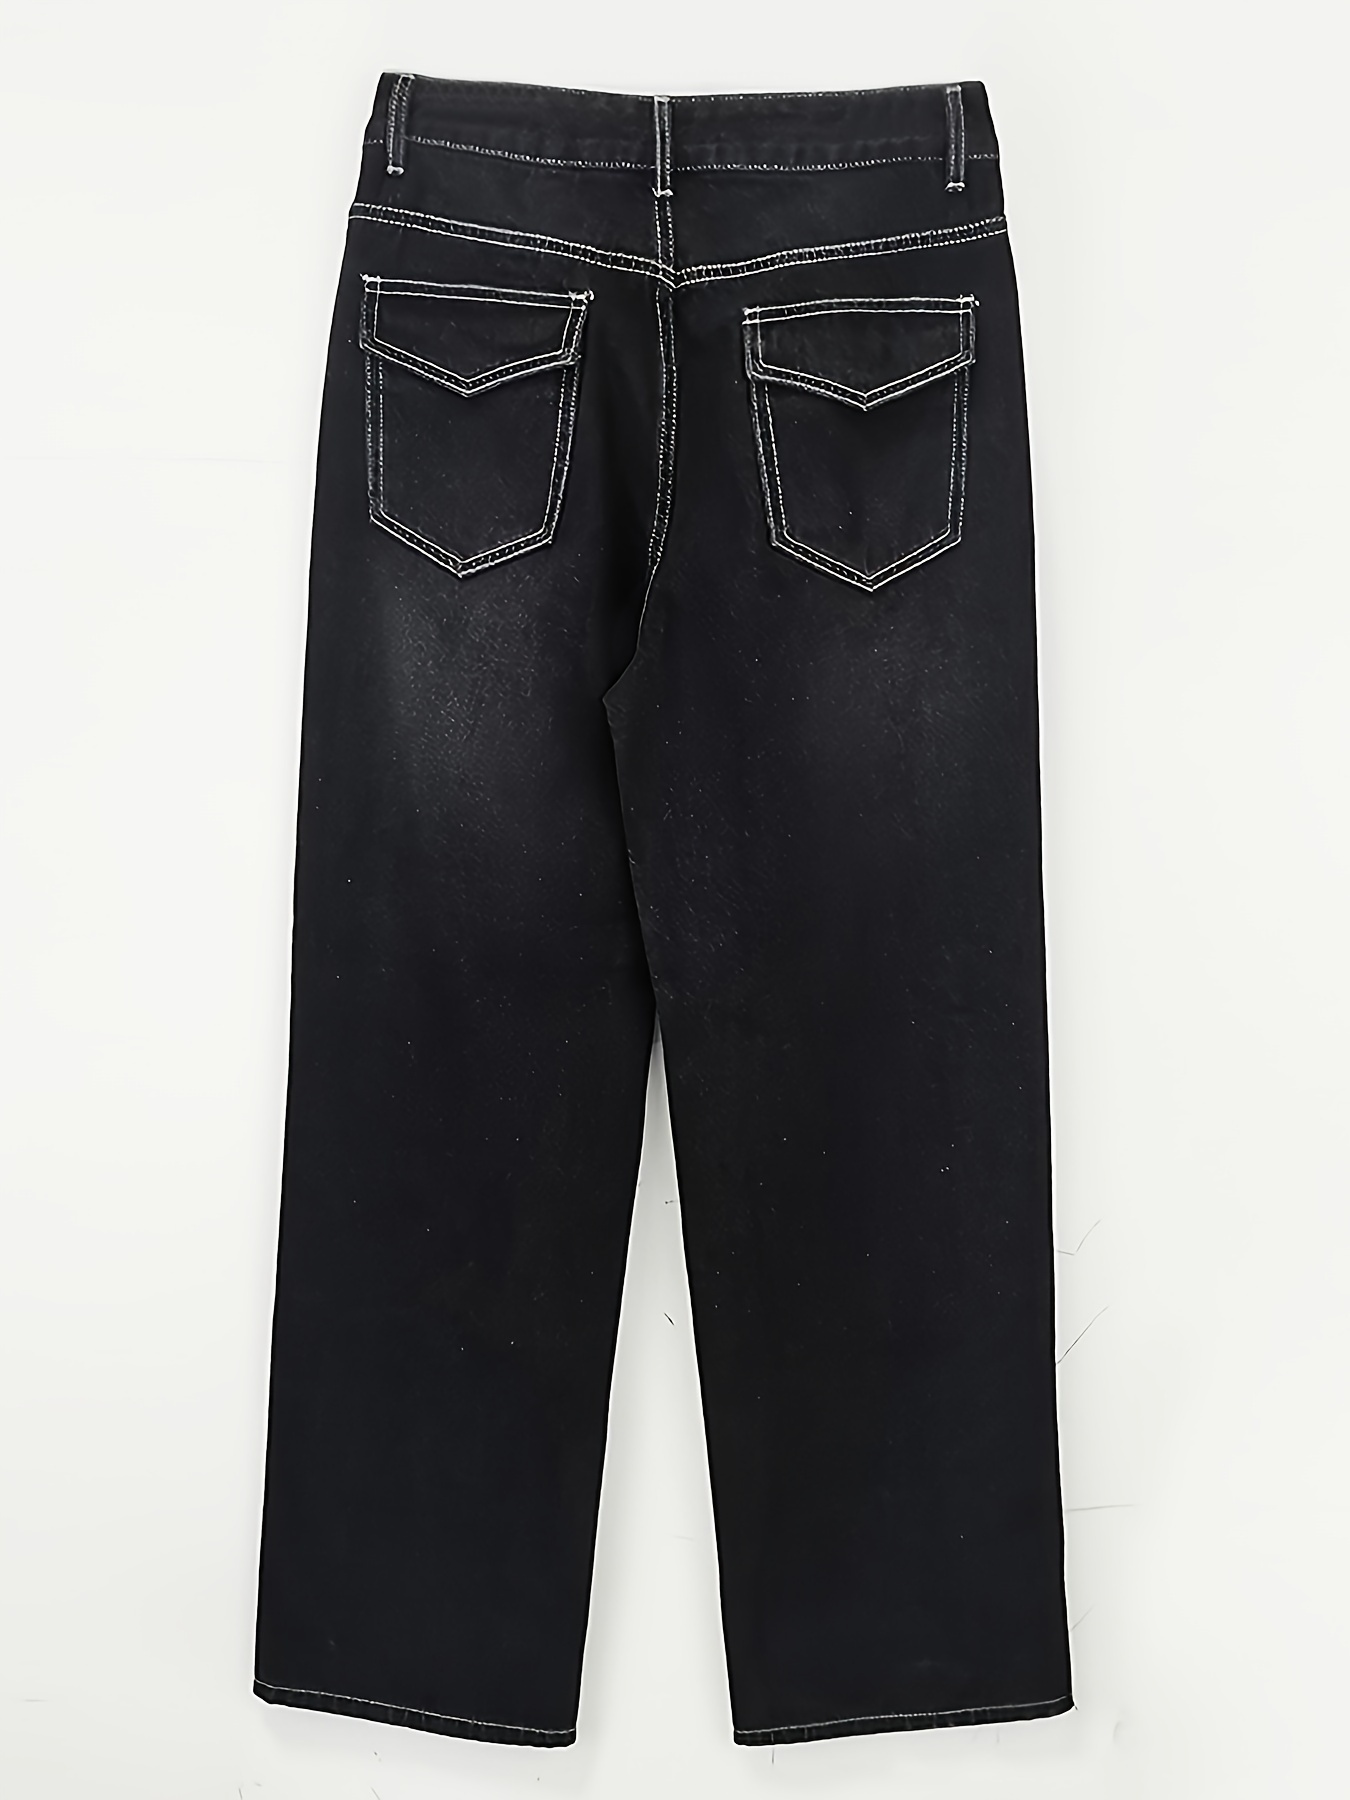 QXXKJDS Stitching Loose Jeans Fashion Street Wear 100% Cotton Women S Jeans Loose  Pants Korean Jeans Harajuku Jeans Women QXXKJDS (Color : Black, Size : L)  price in UAE,  UAE